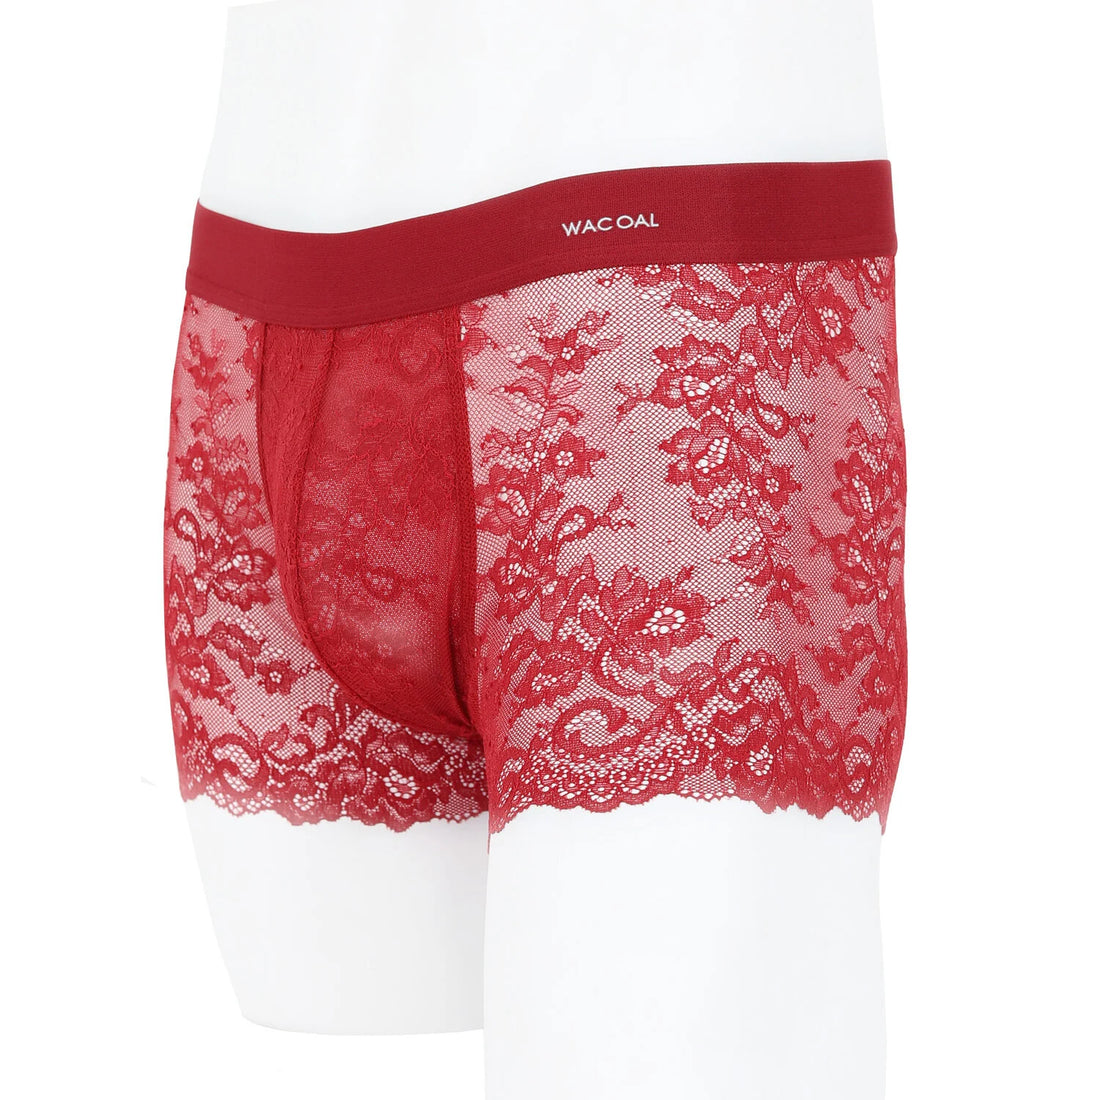 Wacoal Freedom LIMITED UNDERWEAR Men's Underwear Lace (Lace Boxer) Model  WX2652 Red (RE)